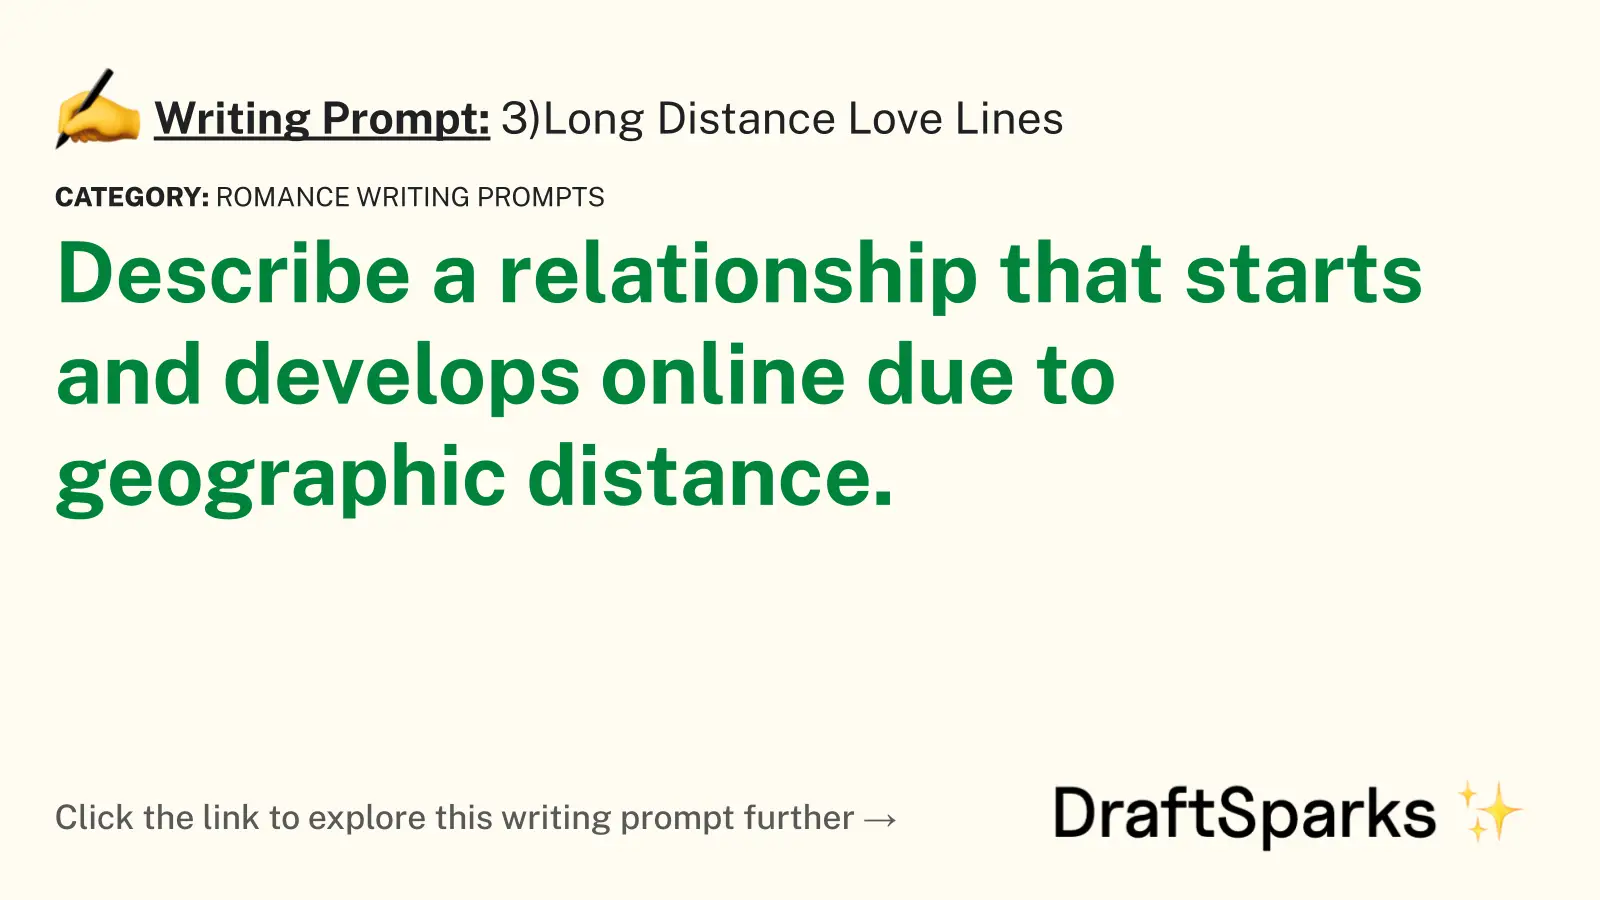 3)Long Distance Love Lines